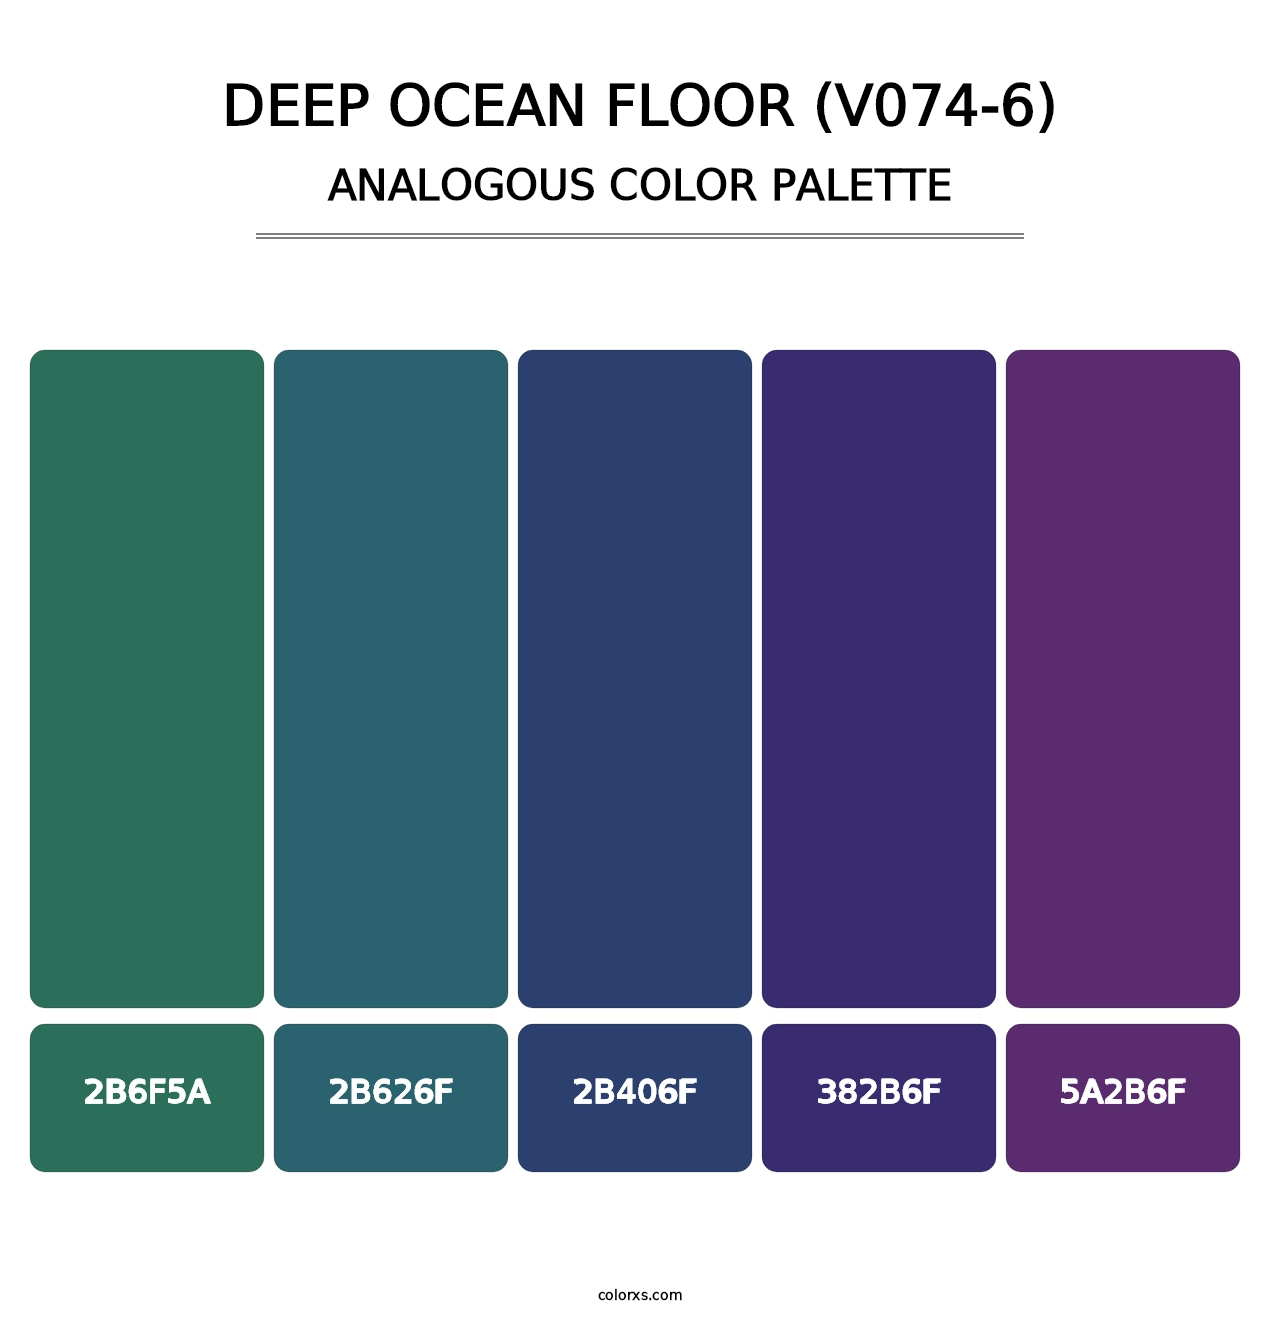 Deep Ocean Floor (V074-6) - Analogous Color Palette